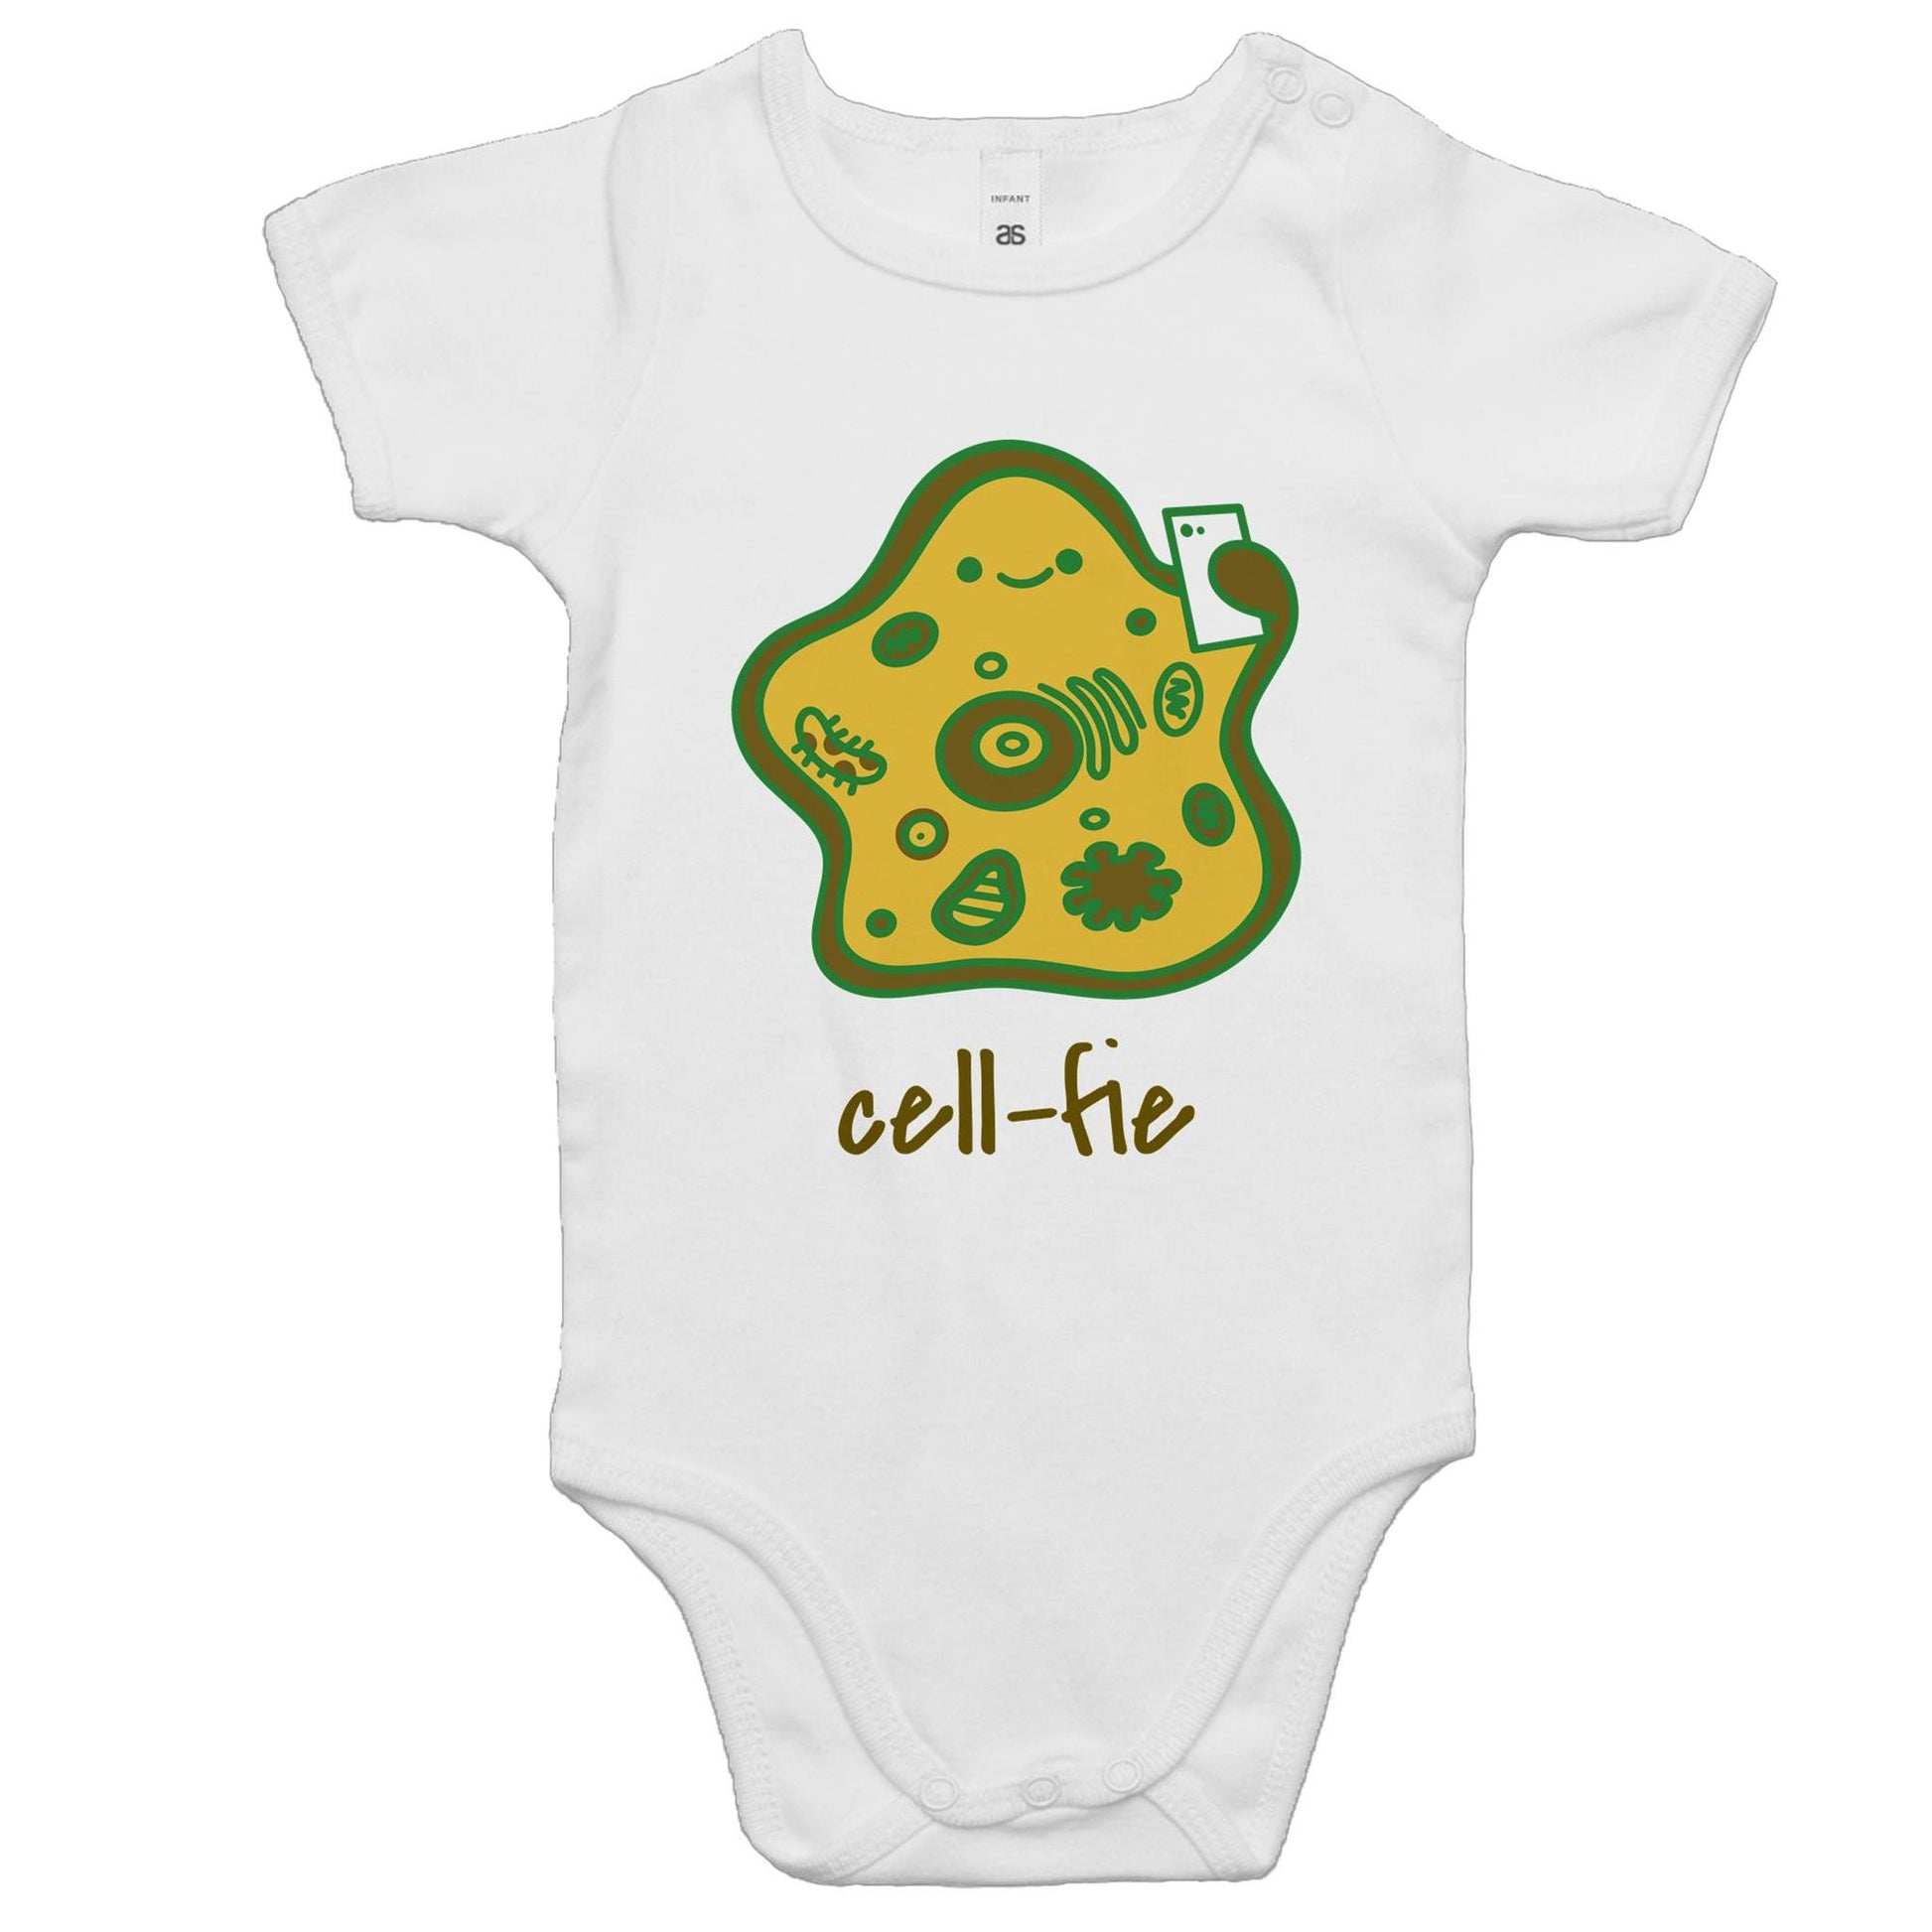 Cell-fie - Baby Bodysuit White Baby Bodysuit Science